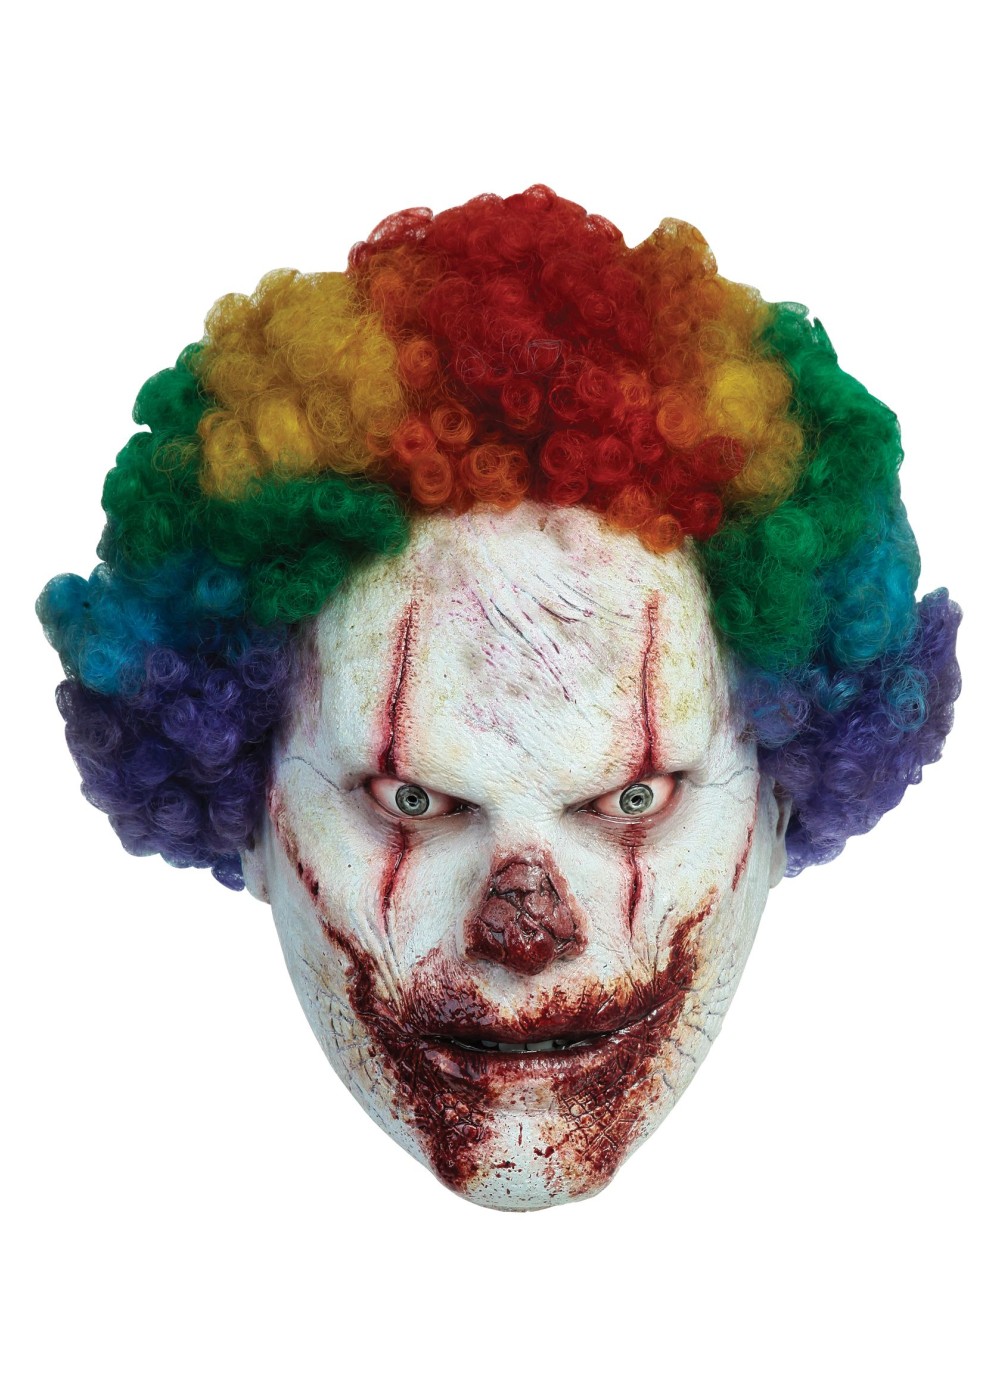 Bloody Clown Mask